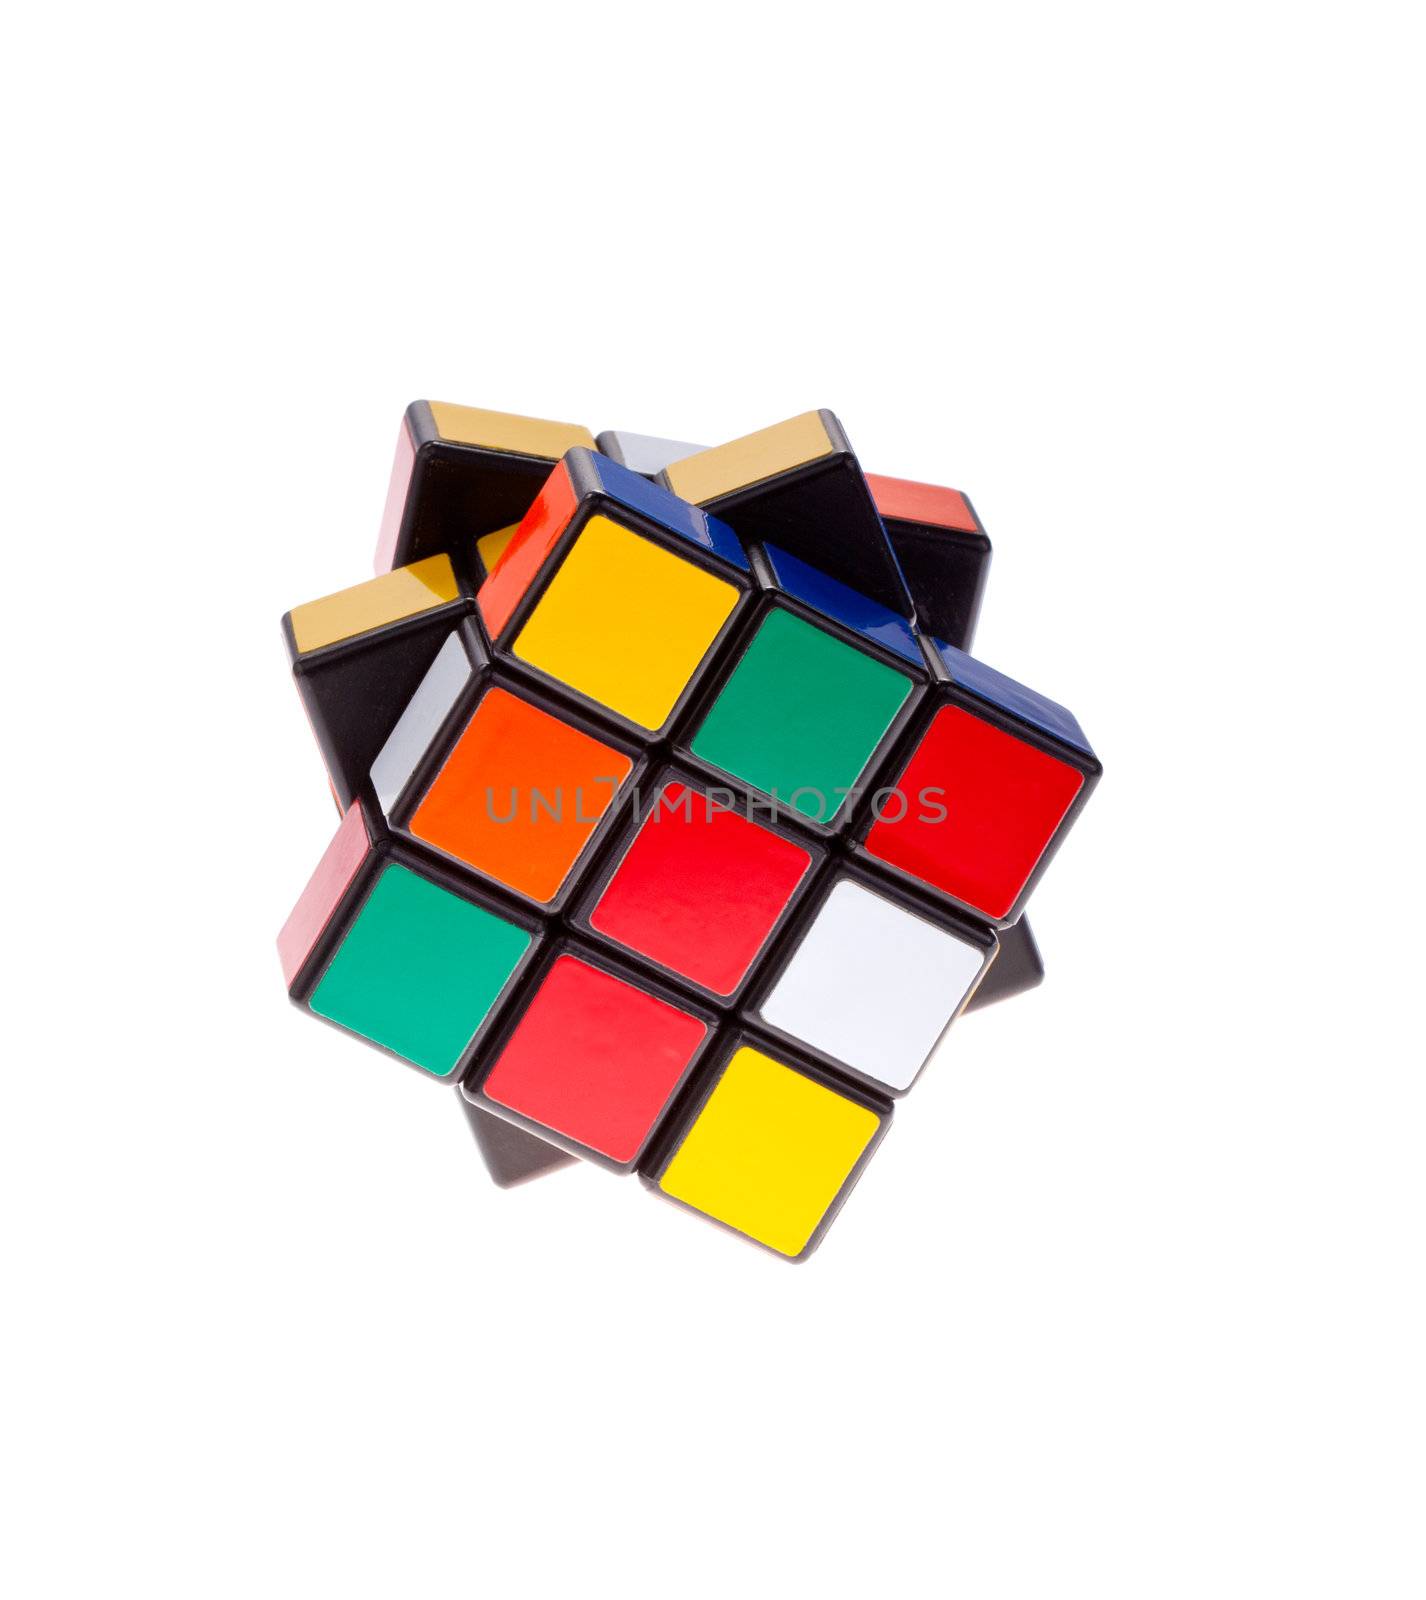 Rubik's Cube by sfinks